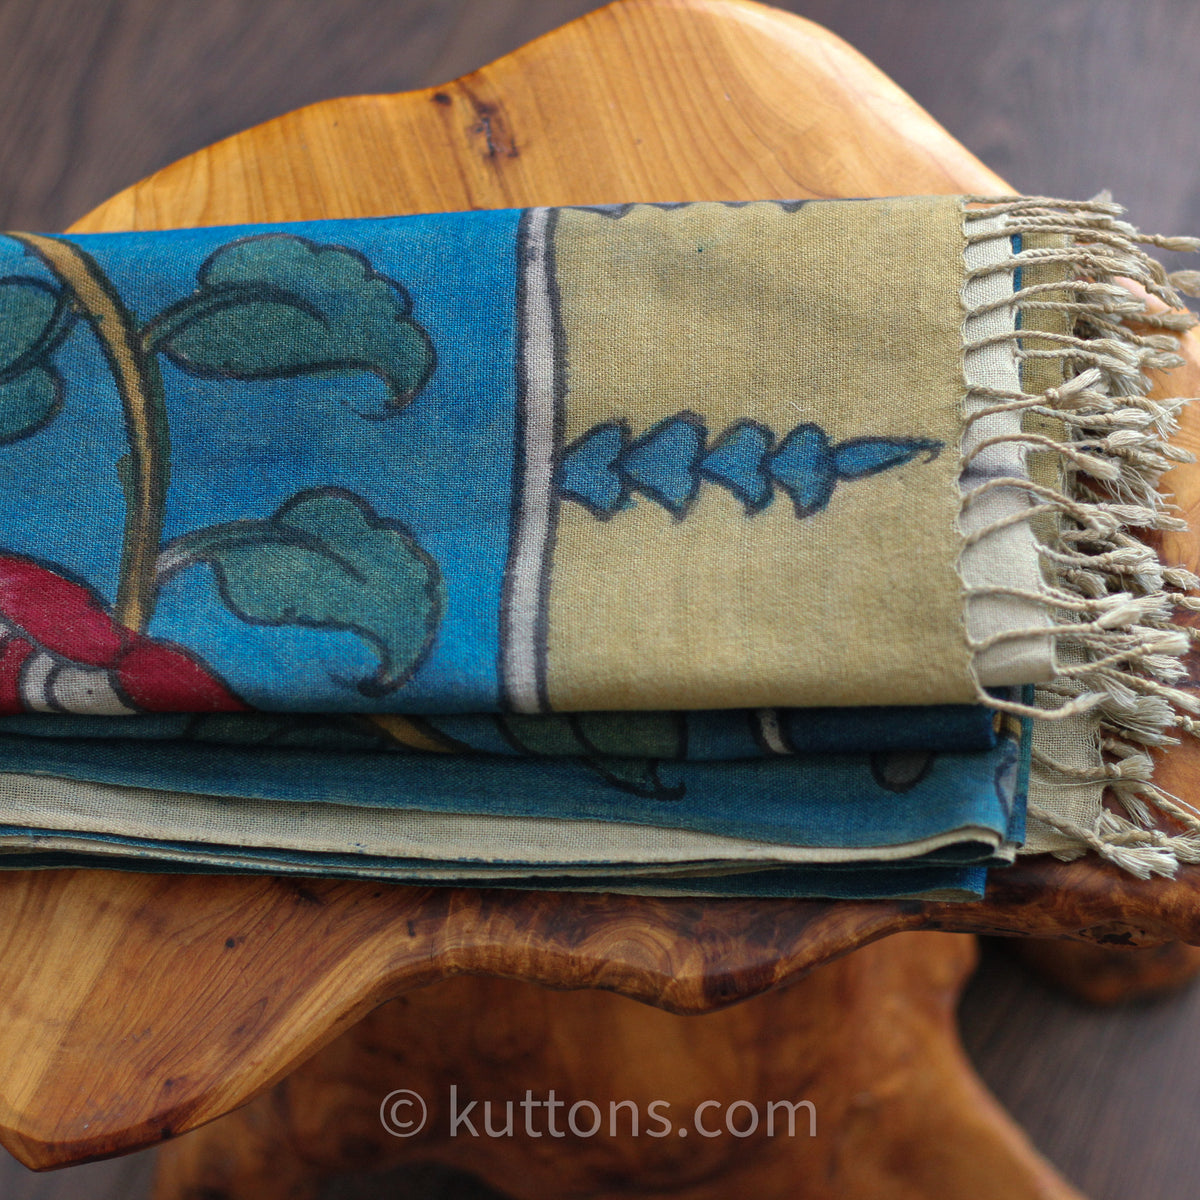 kalamkari scarf hand-painted using natural dyes